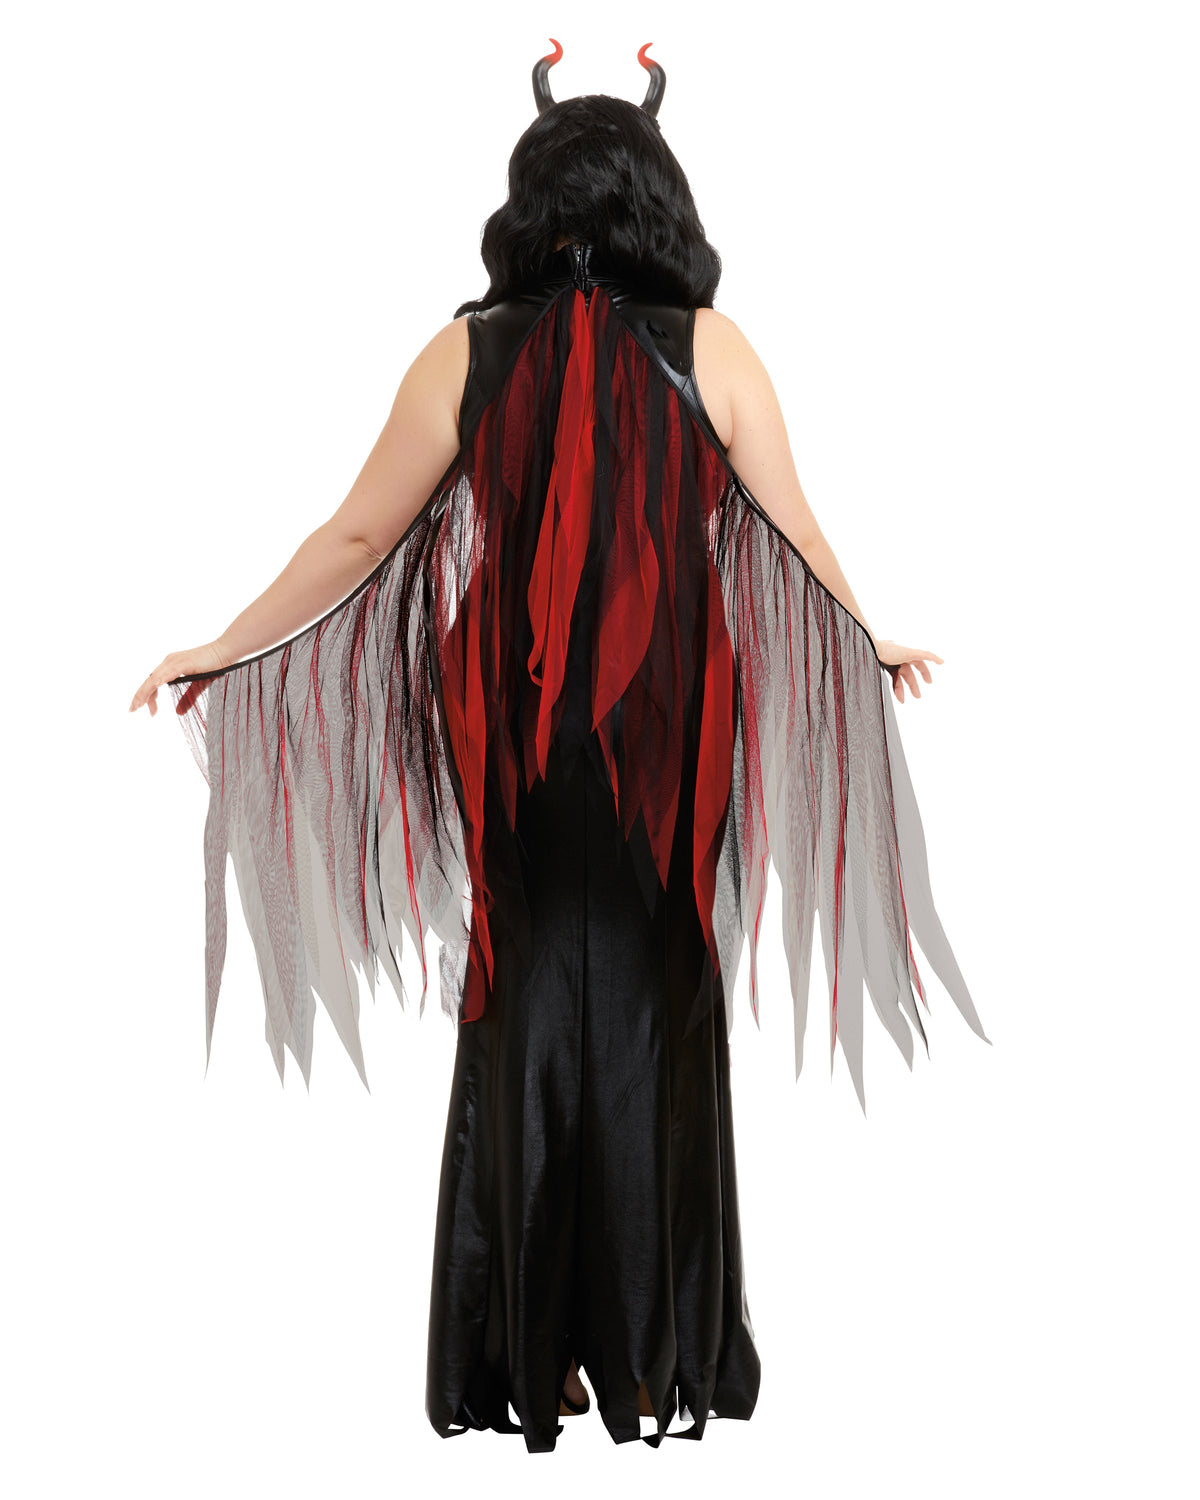 Plus Size Dark Mistress Women's Costume Dreamgirl International 